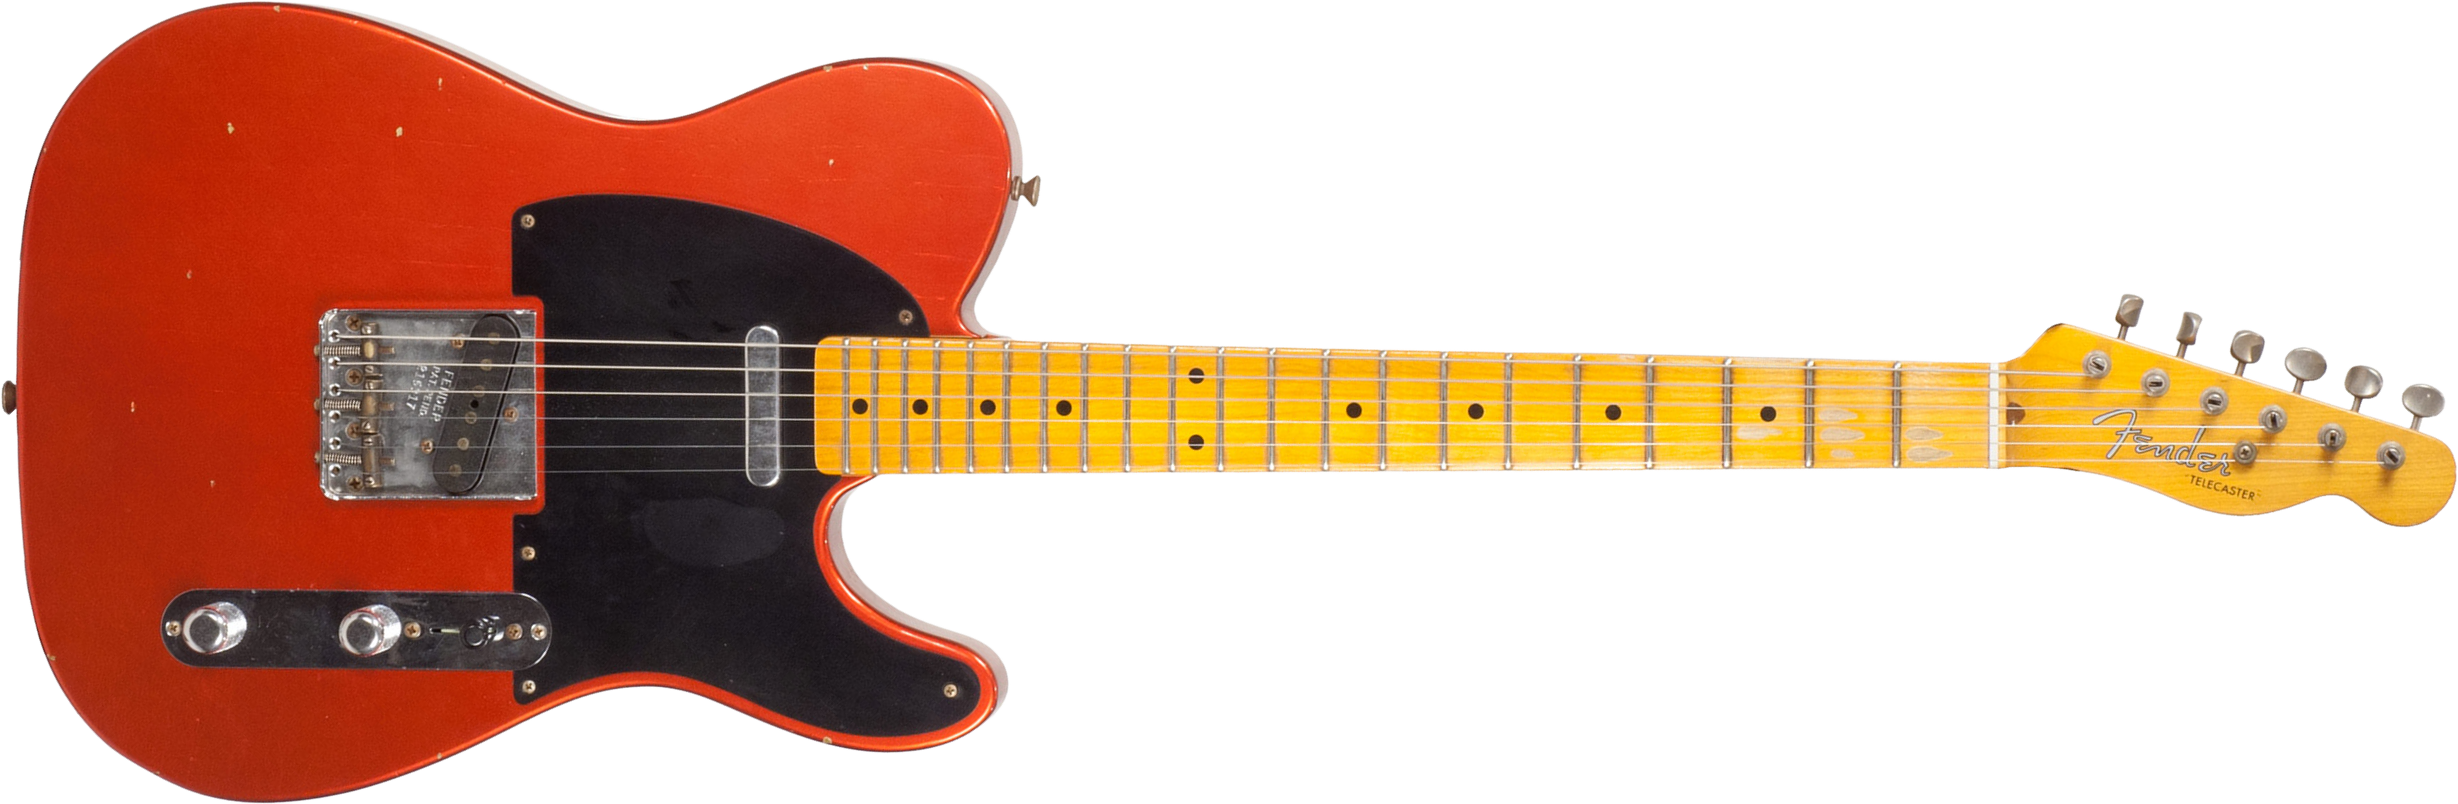 Fender Custom Shop Tele 1952 2s Ht Mn #r16317 - Journeyman Relic Melon Candy - Tel shape electric guitar - Main picture